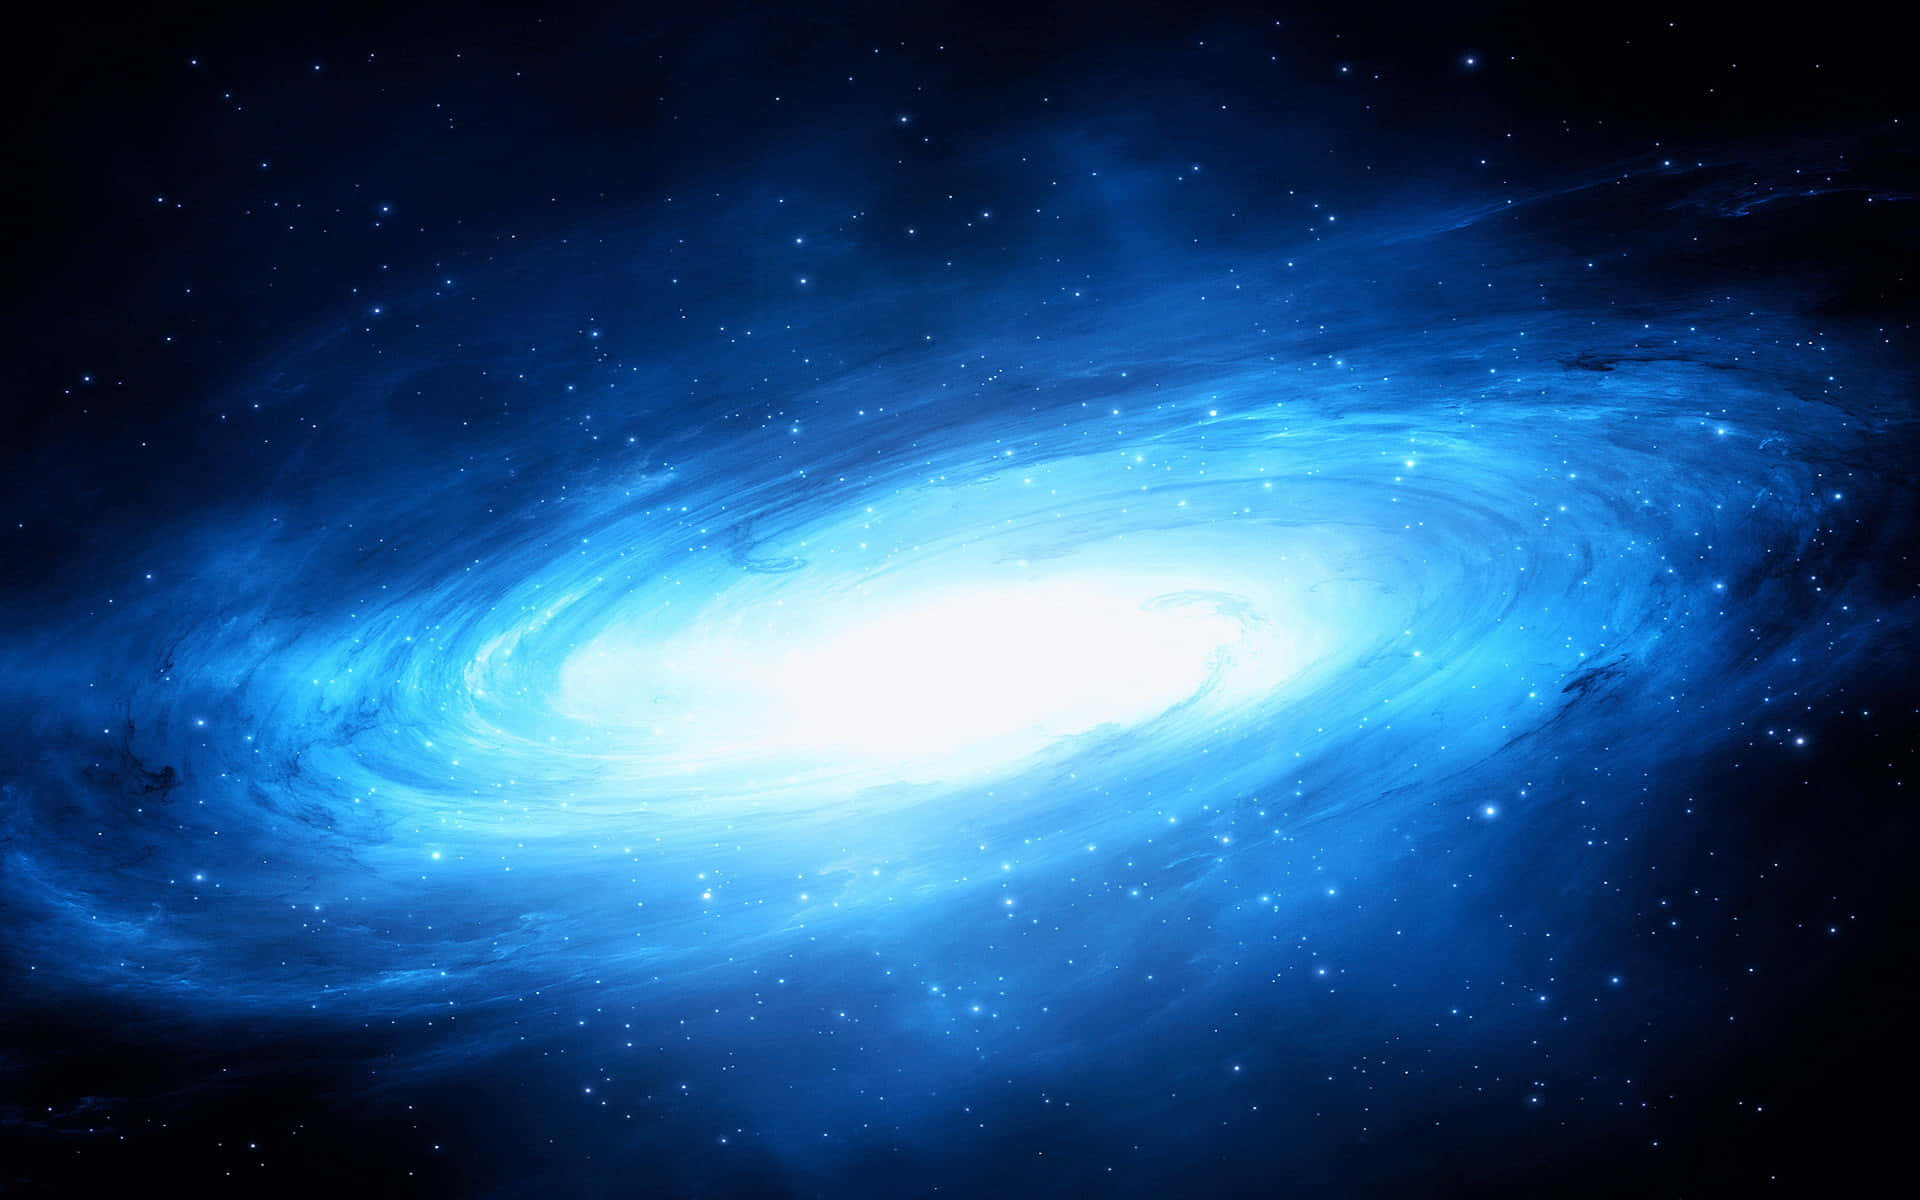 A breathtaking image of a majestic blue galaxy.